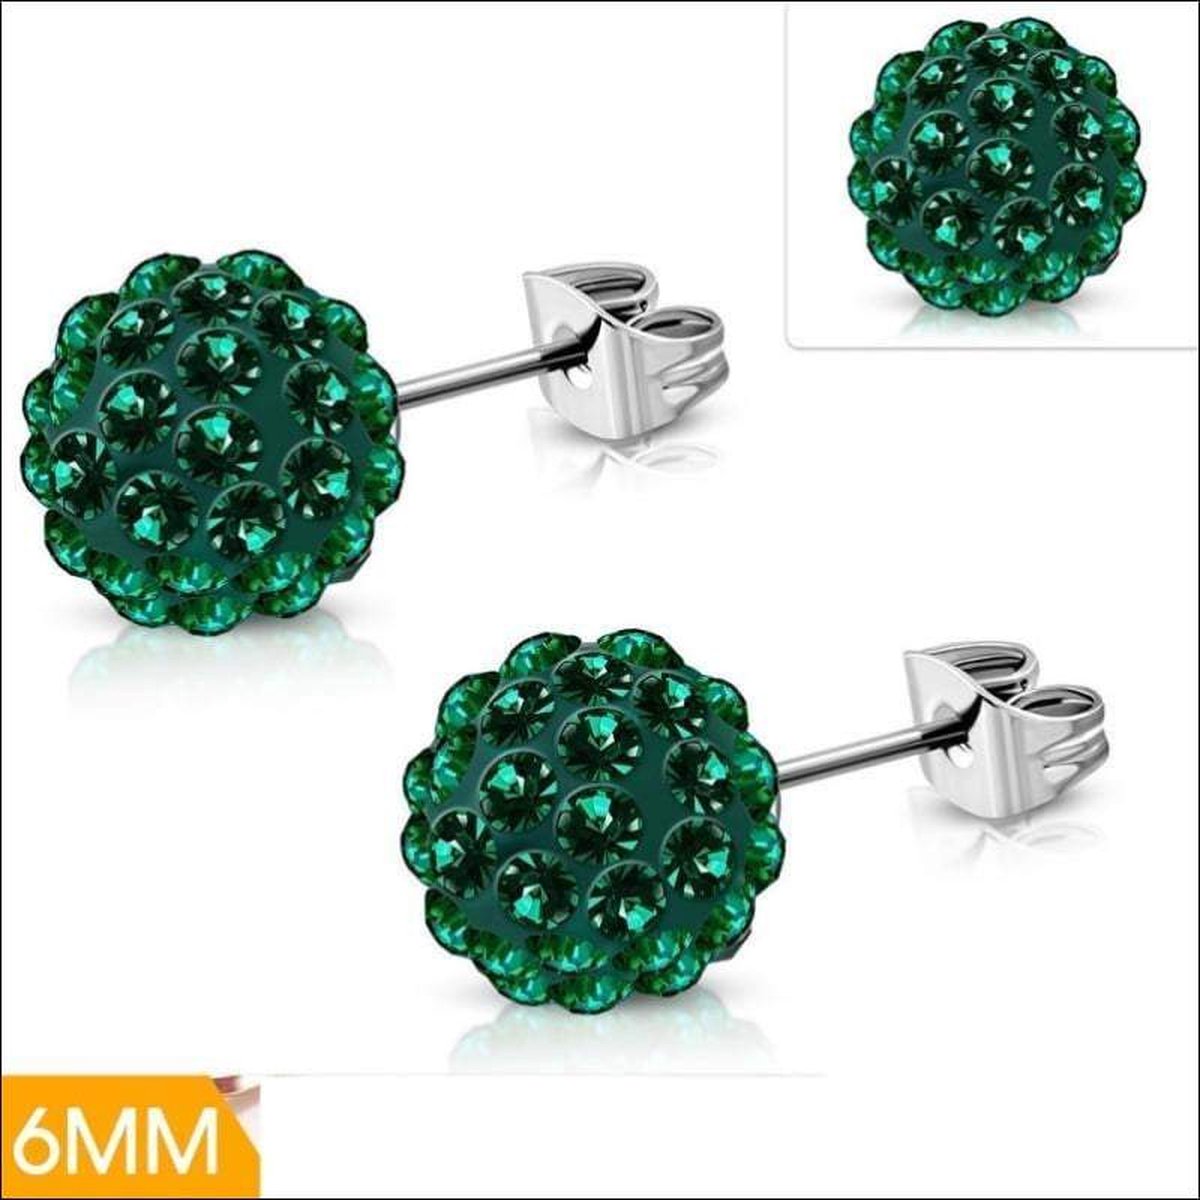 Aramat jewels ® - Shamballa bolletjes oorstekers groen zilverkleurig staal 6mm